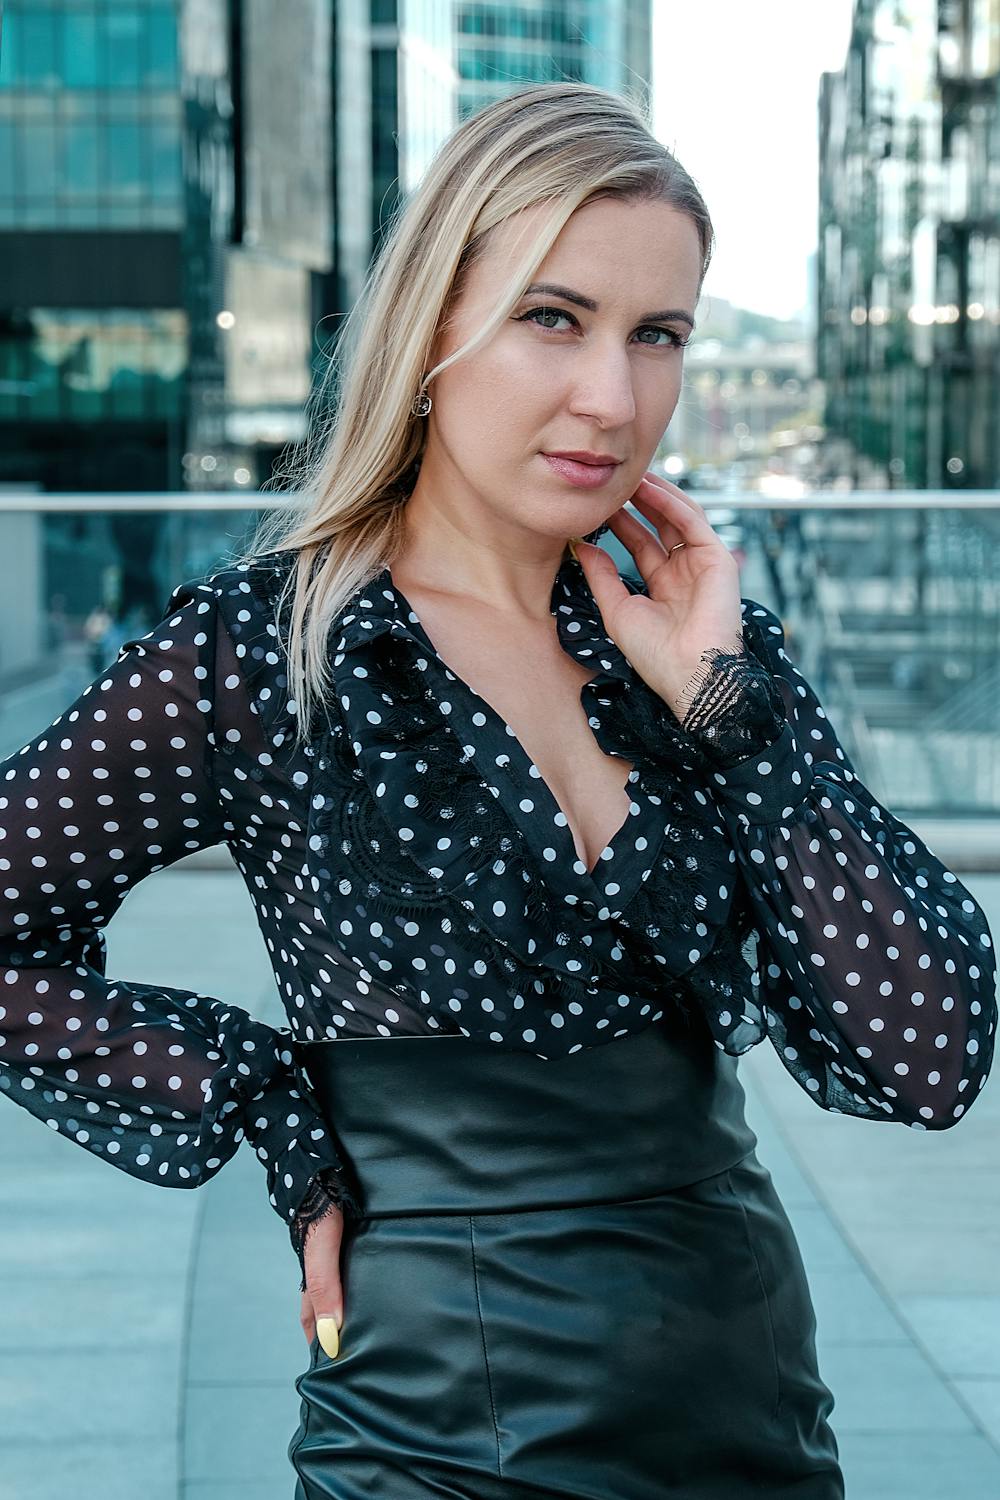 Female entrepreneur in elegant suit · Free Stock Photo